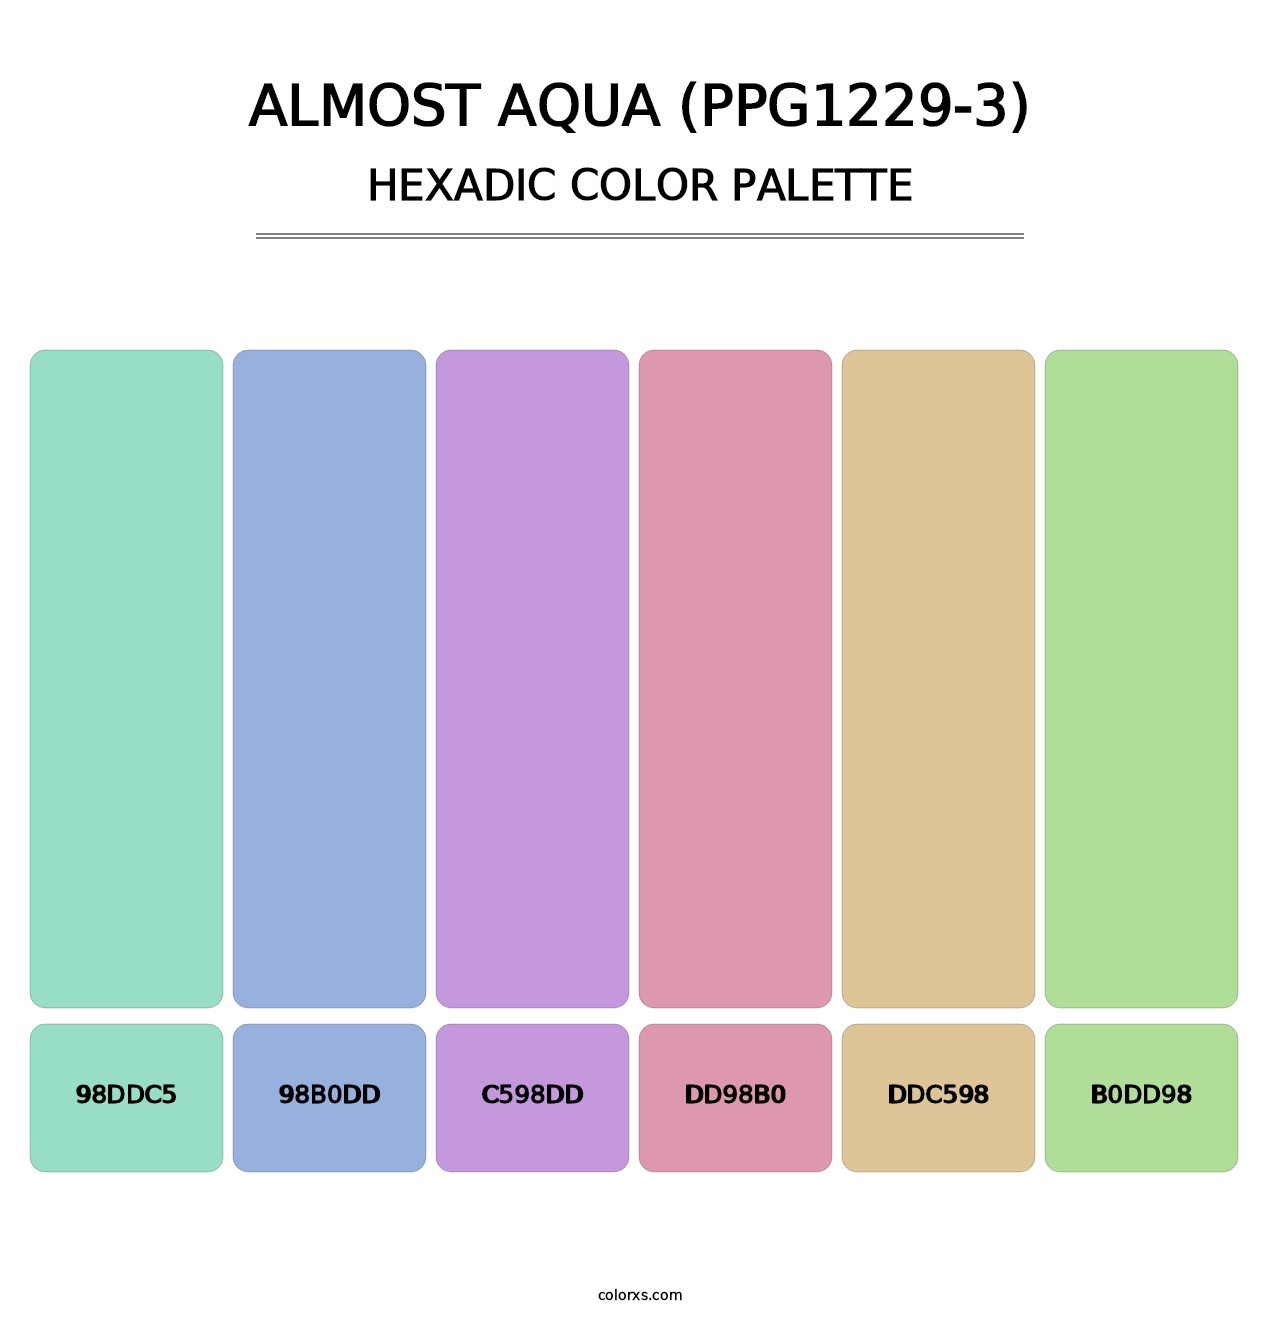 Almost Aqua (PPG1229-3) - Hexadic Color Palette